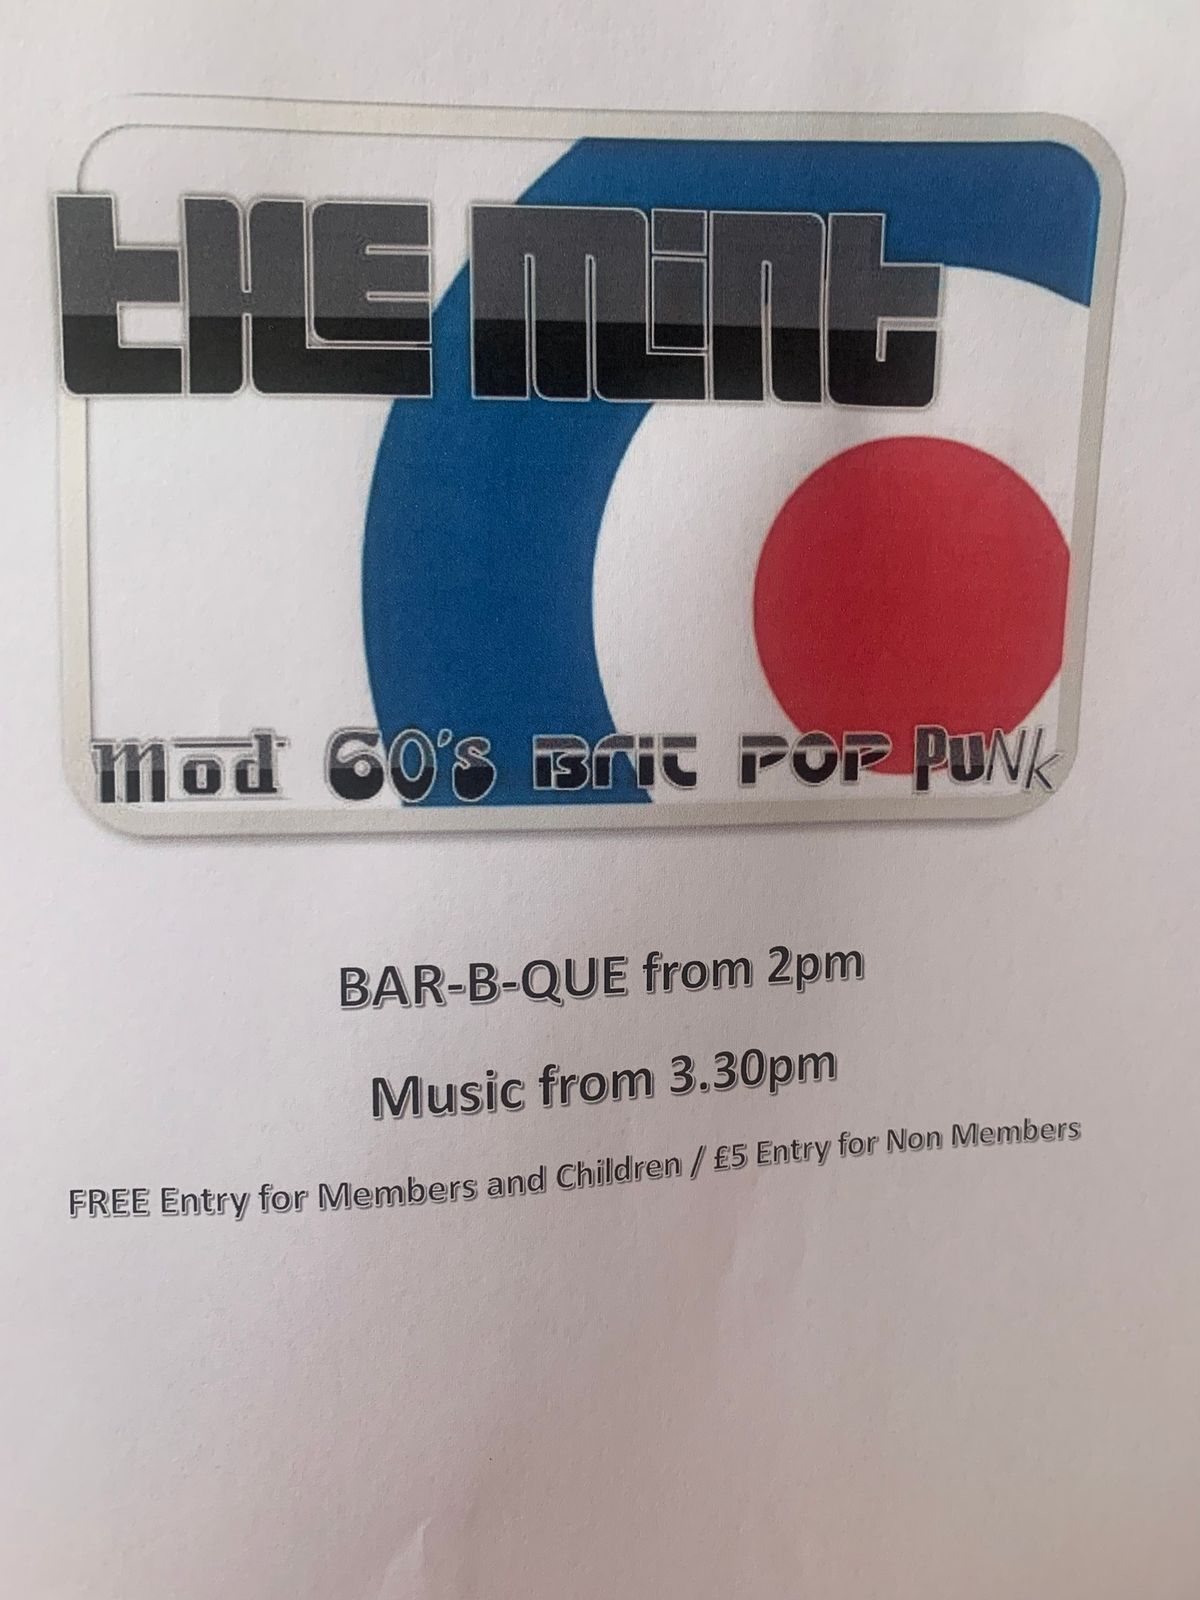 Bar-B-Q and Live music